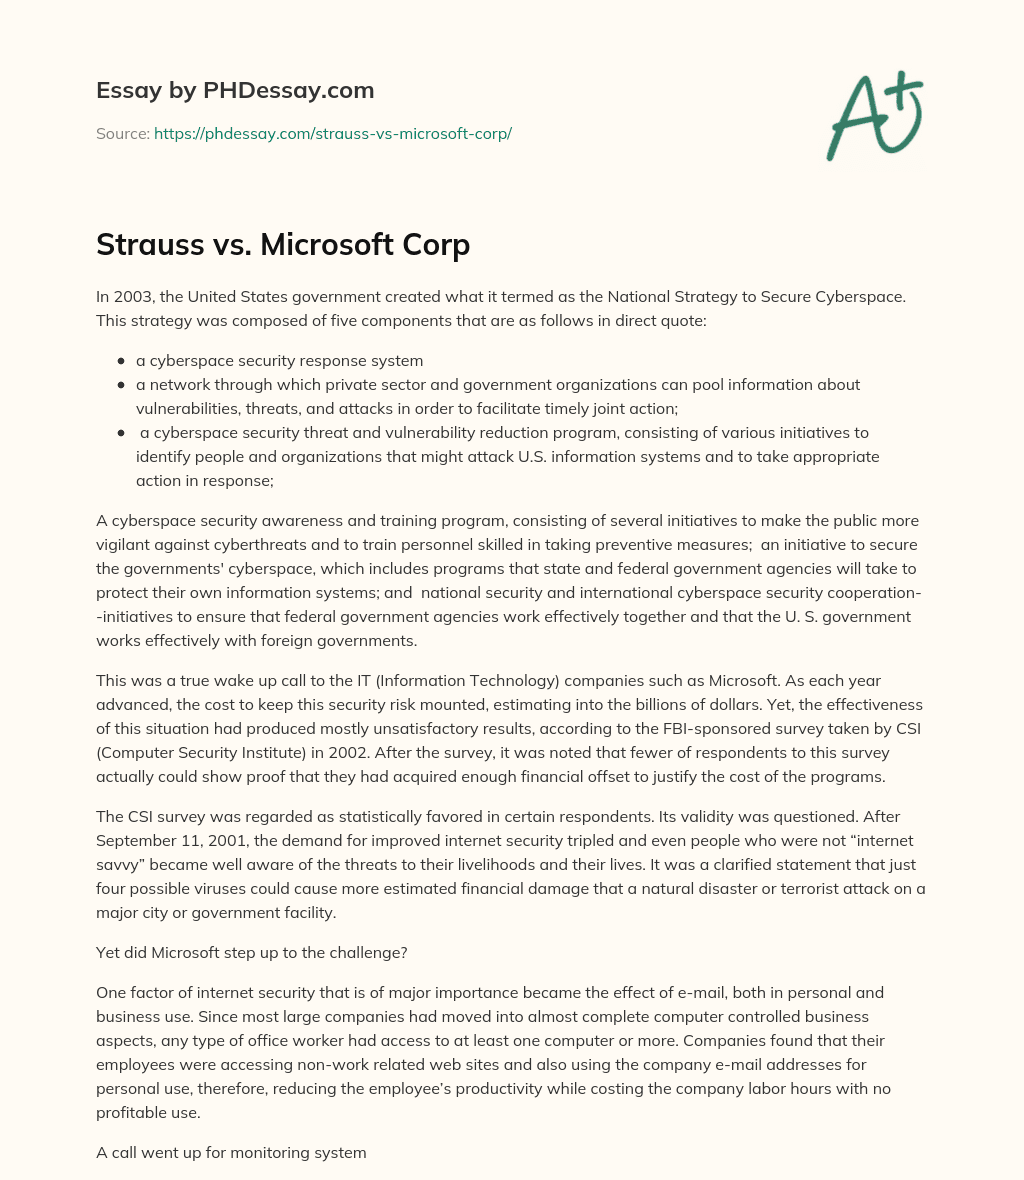 Strauss vs. Microsoft Corp essay